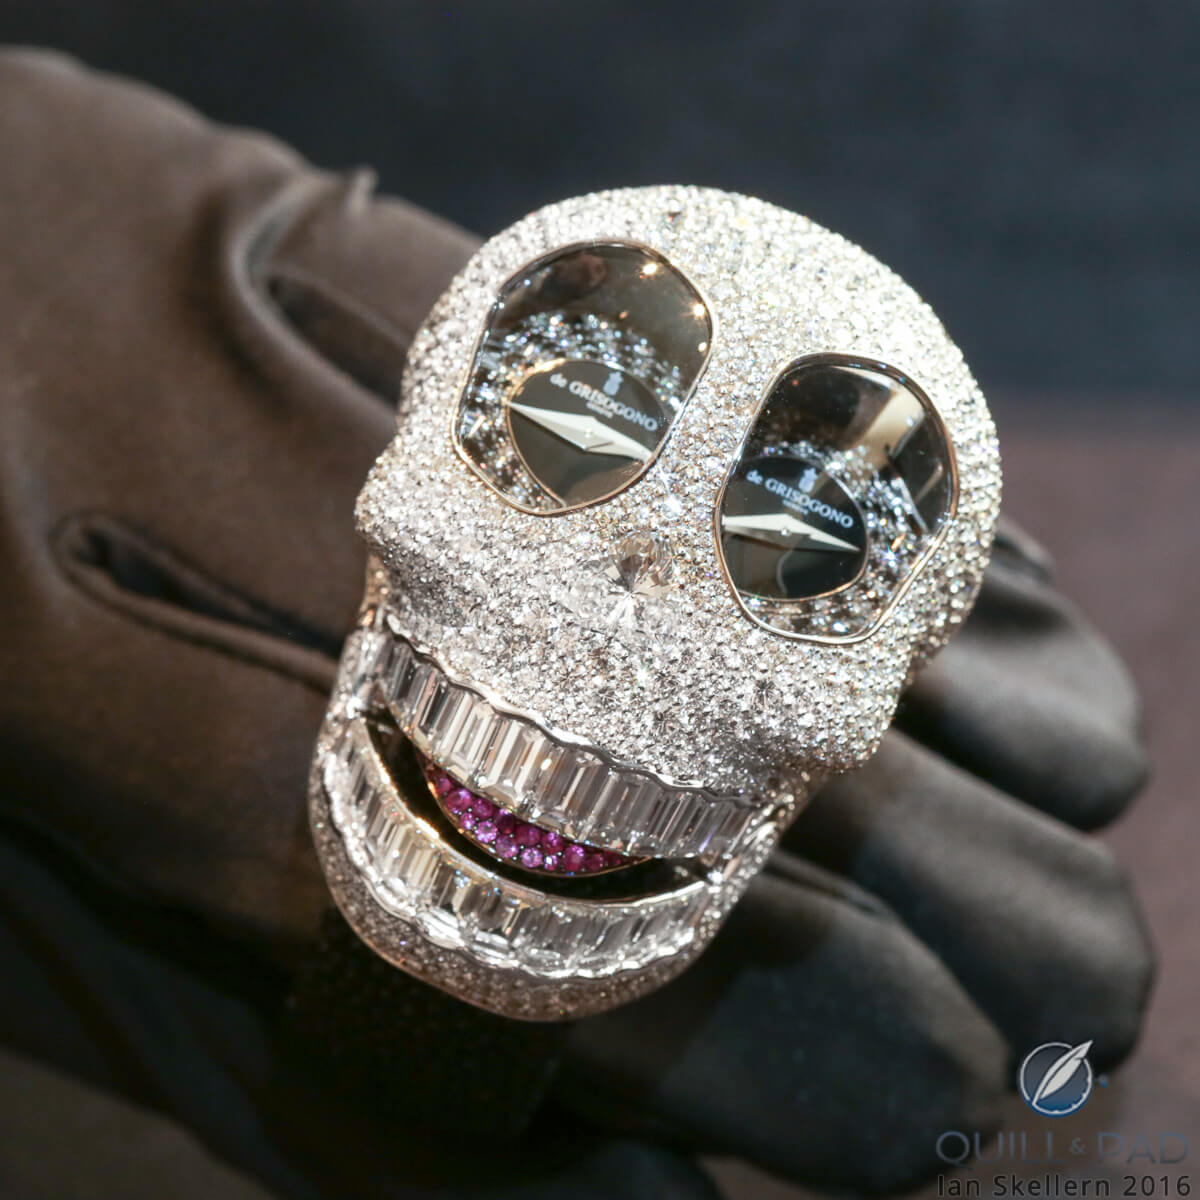 De Grisogono Skull with time-telling eyes